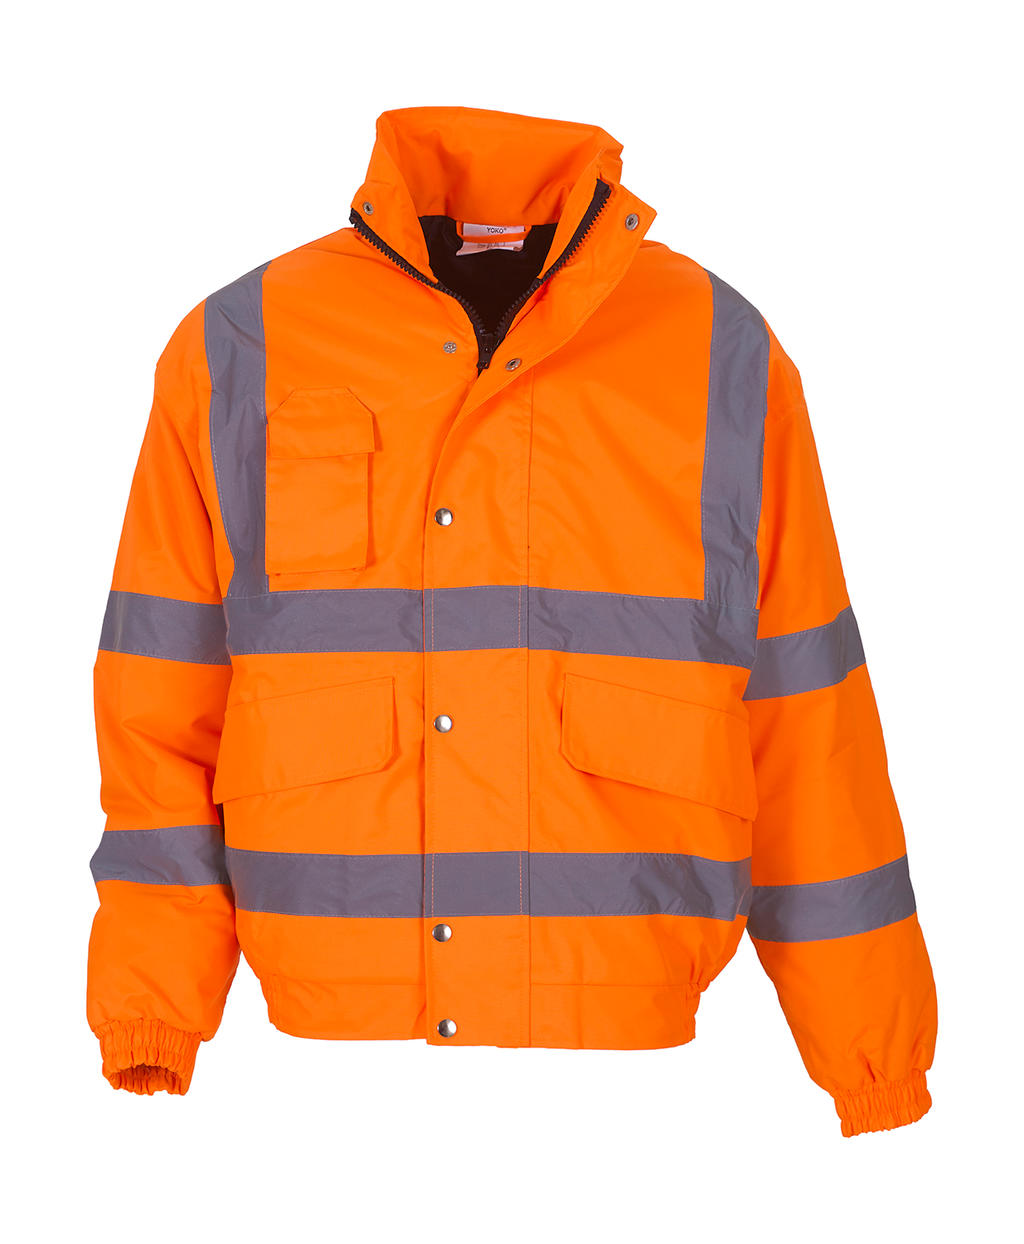  Fluo Bomber Jacket in Farbe Fluo Orange